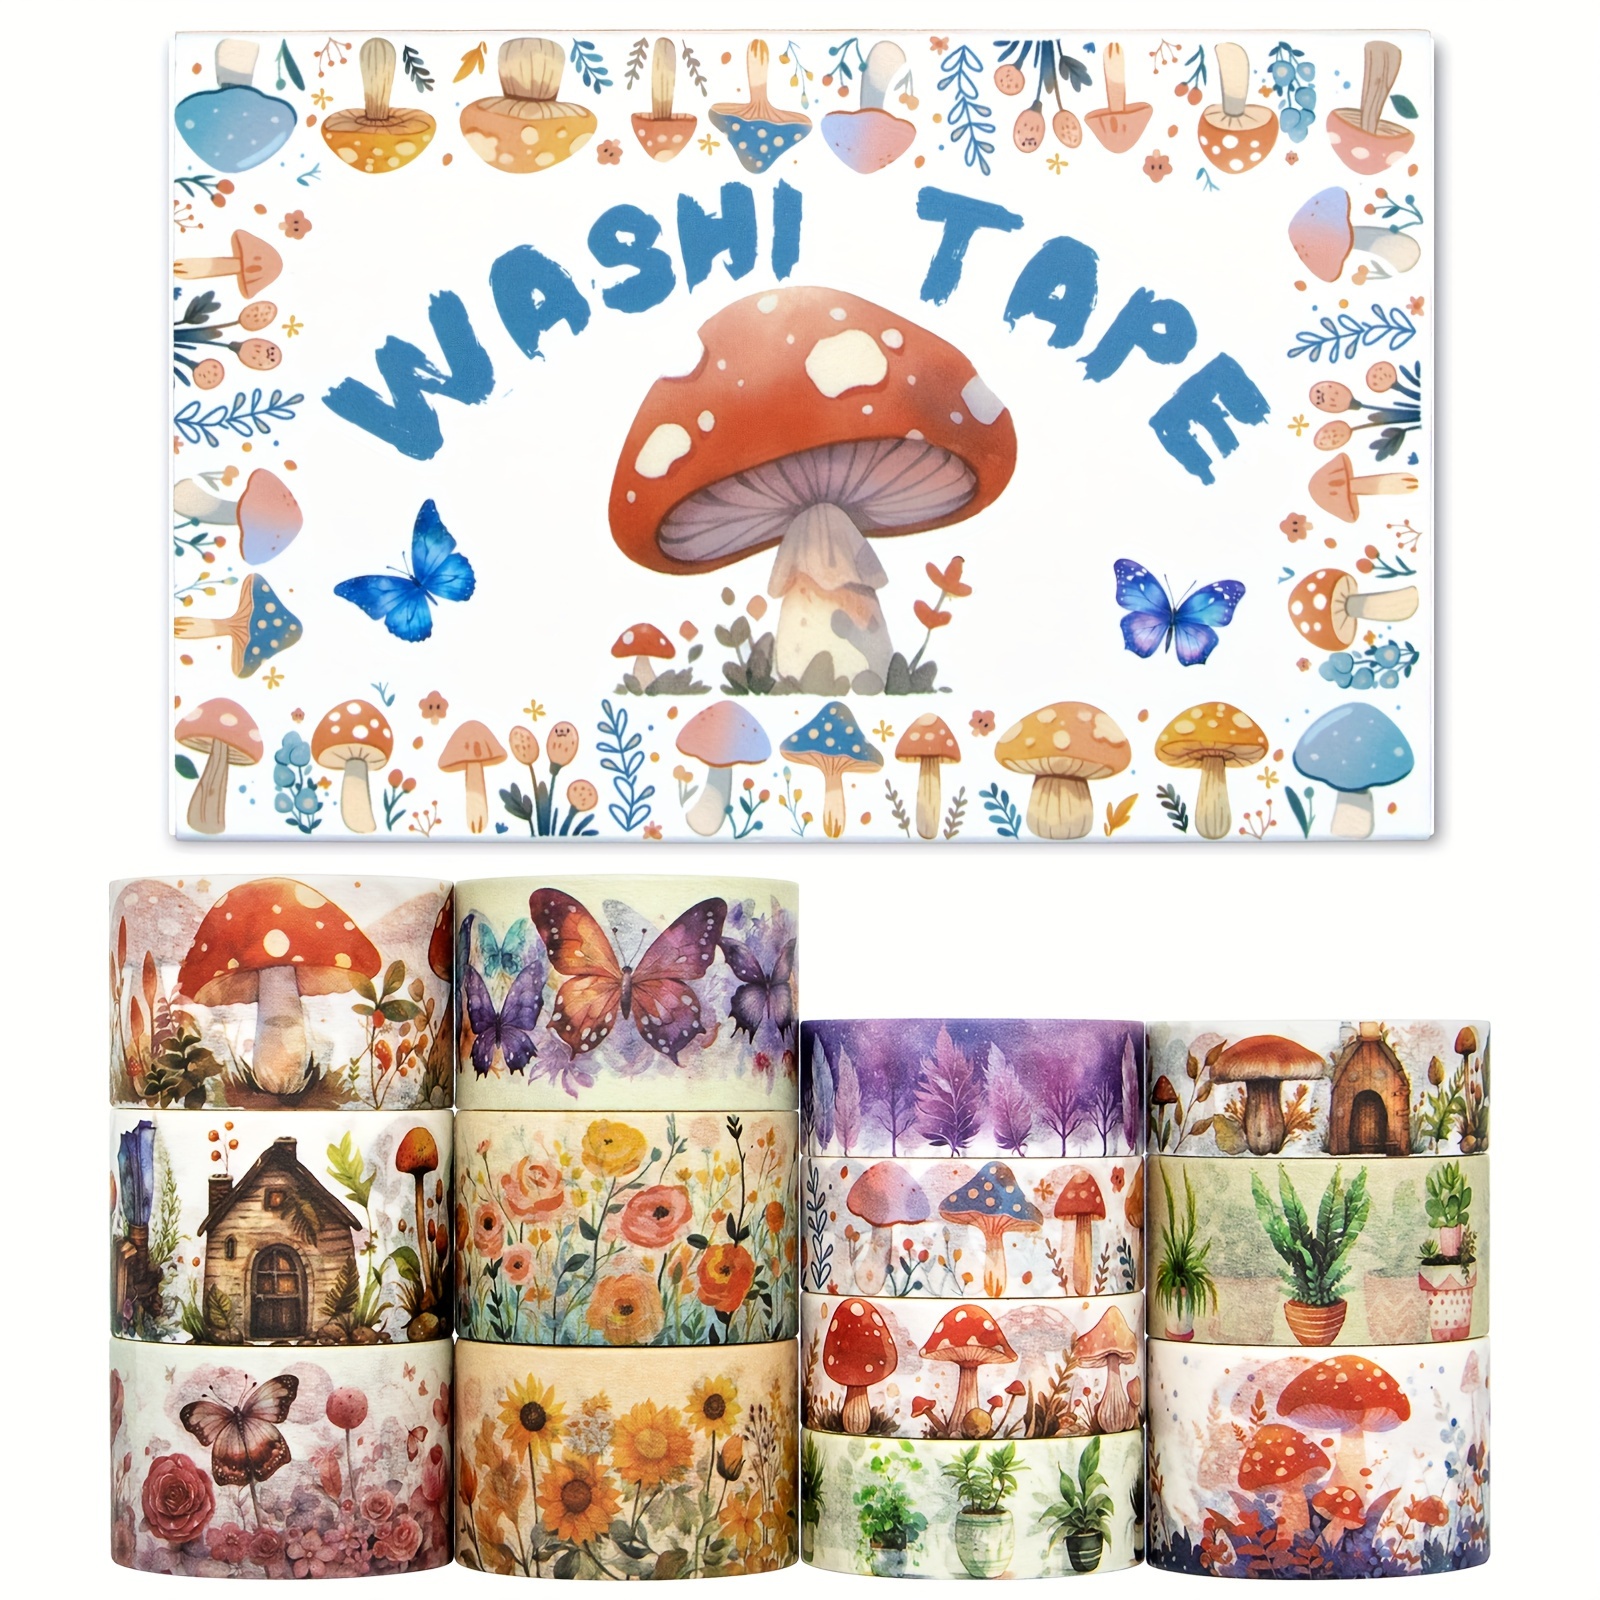 

13 Rolls Washi Tape Set - Mushroom Butterfly Floral Decorative Tape, Colored Masking Tape For Scrapbooking Supplies, Bullet Journal Supplies, Junk Journal, Diy Crafts Art